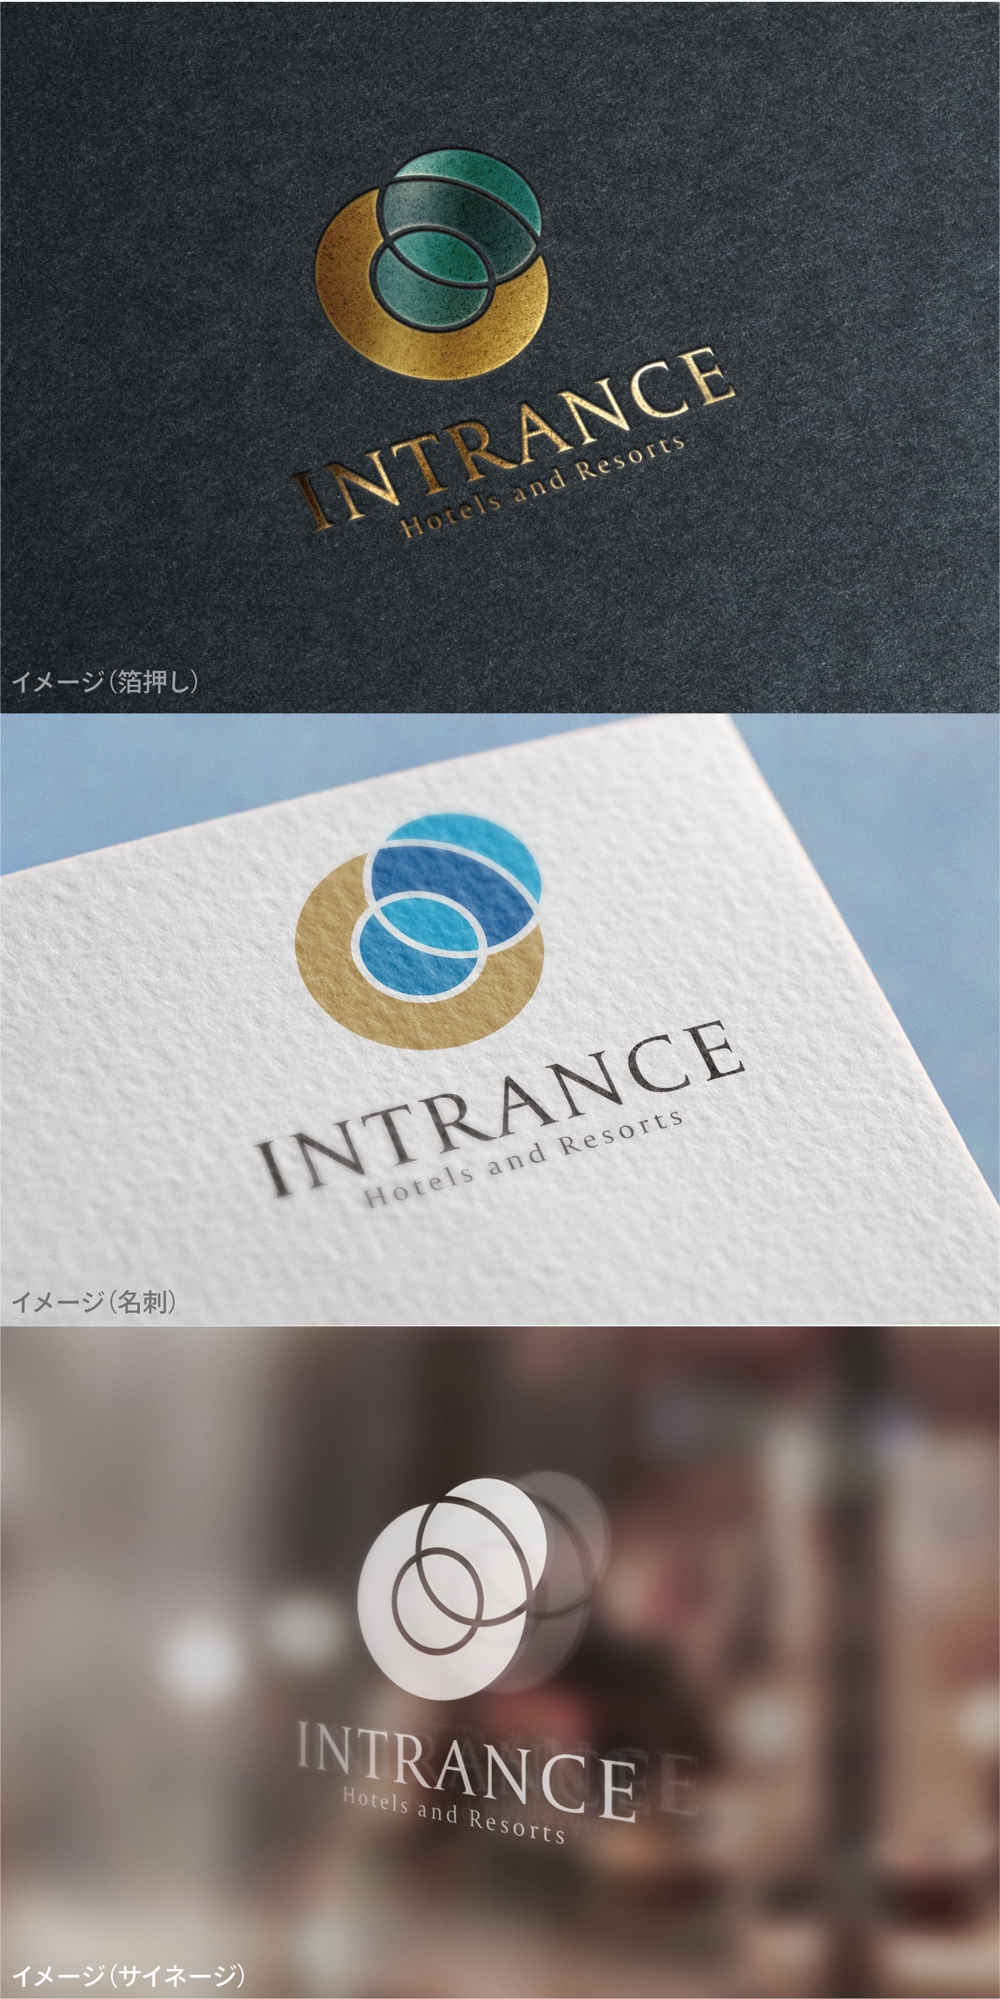 Intrance Hotels and Resorts_logo01_01.jpg